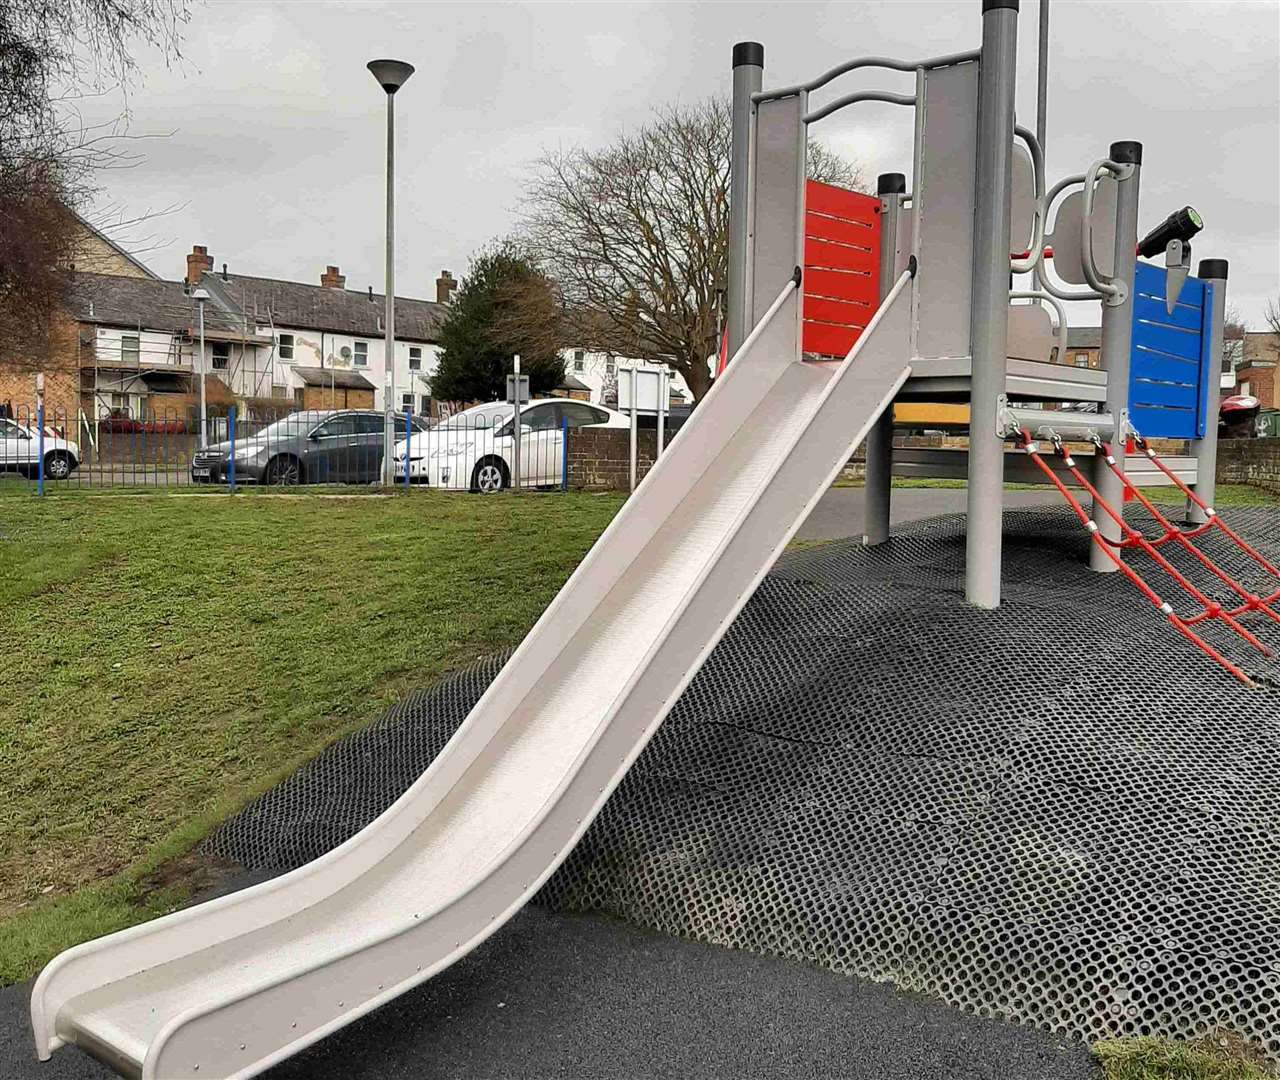 The playground in Camden Street, Maidstone